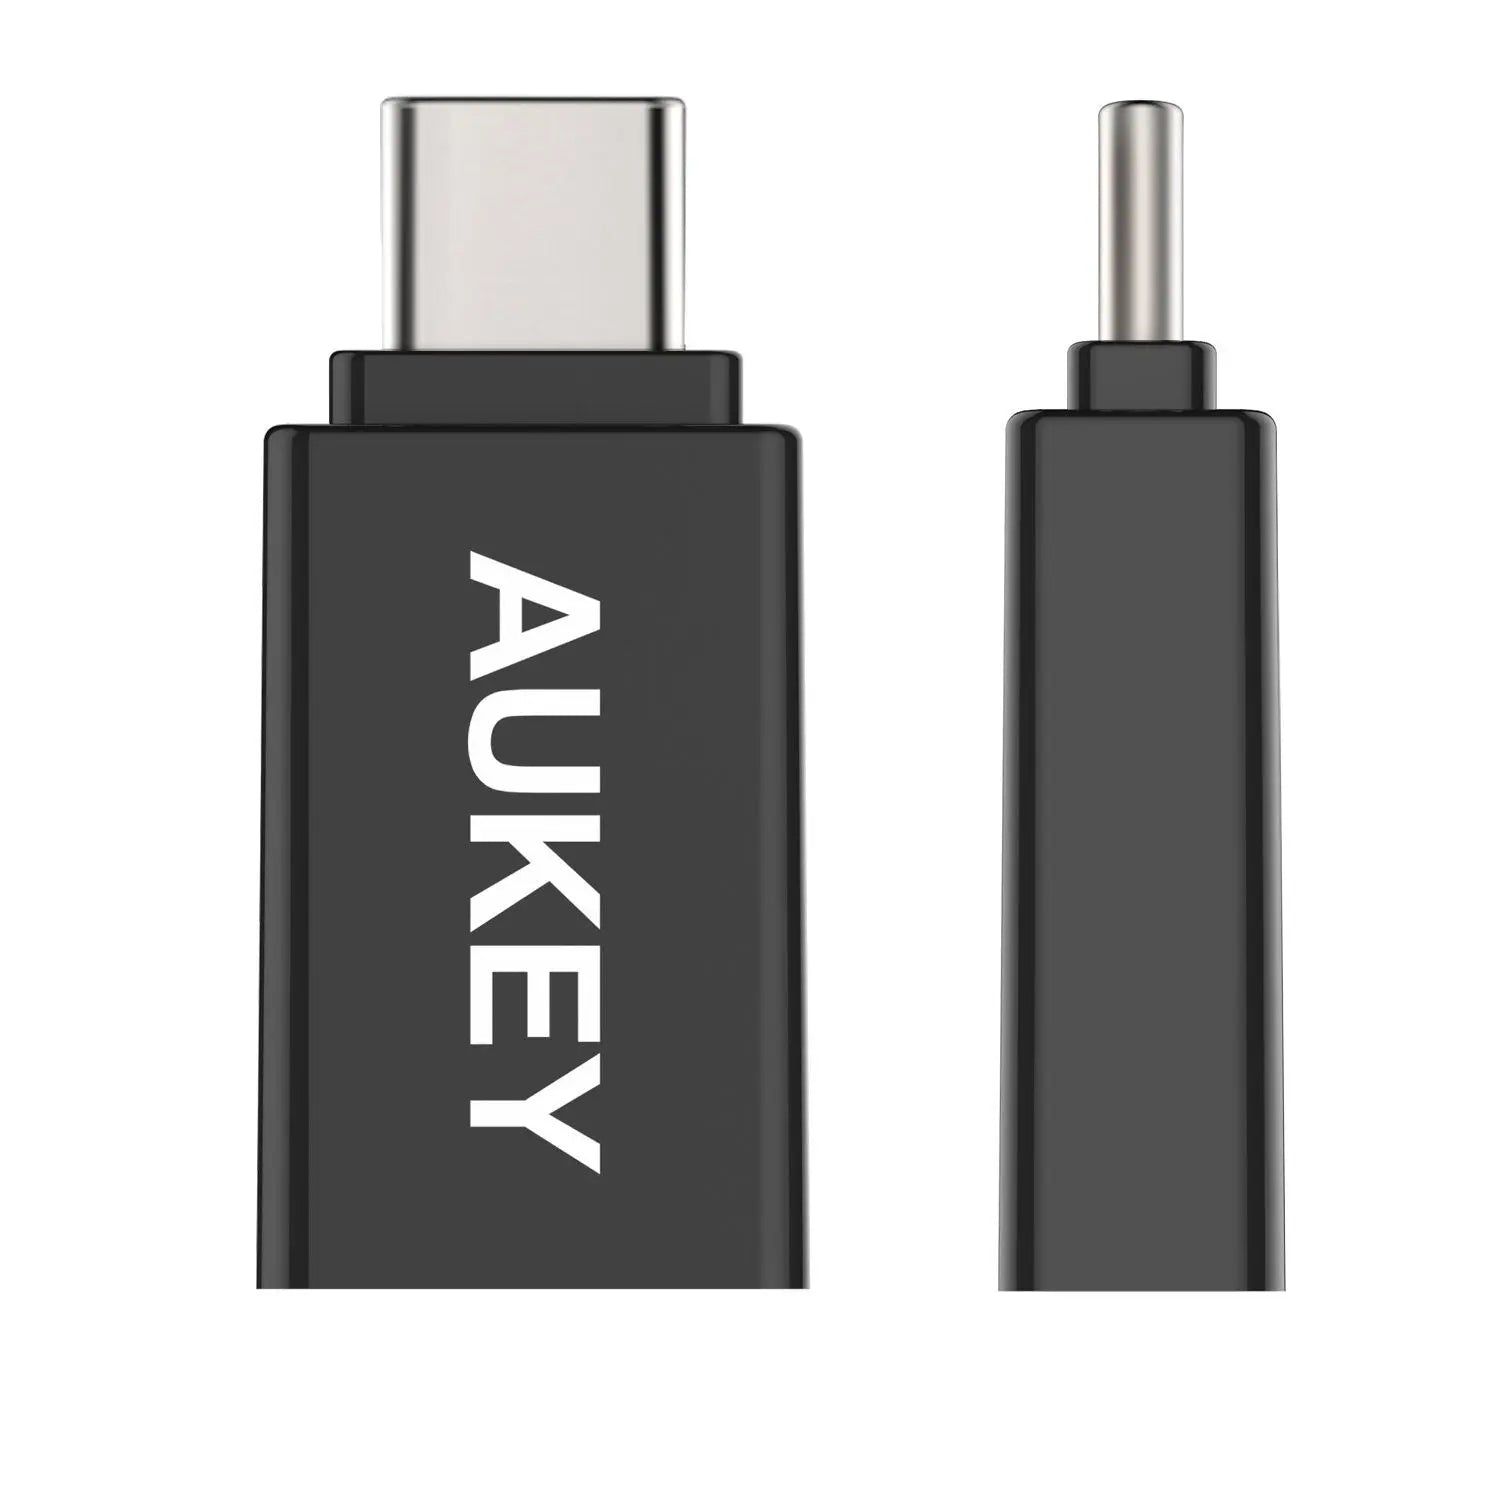 AUKEY Adaptateur USB C vers USB A 3.0 Connecteur USB 3.0 Type-C male vers Type-A AUKEY